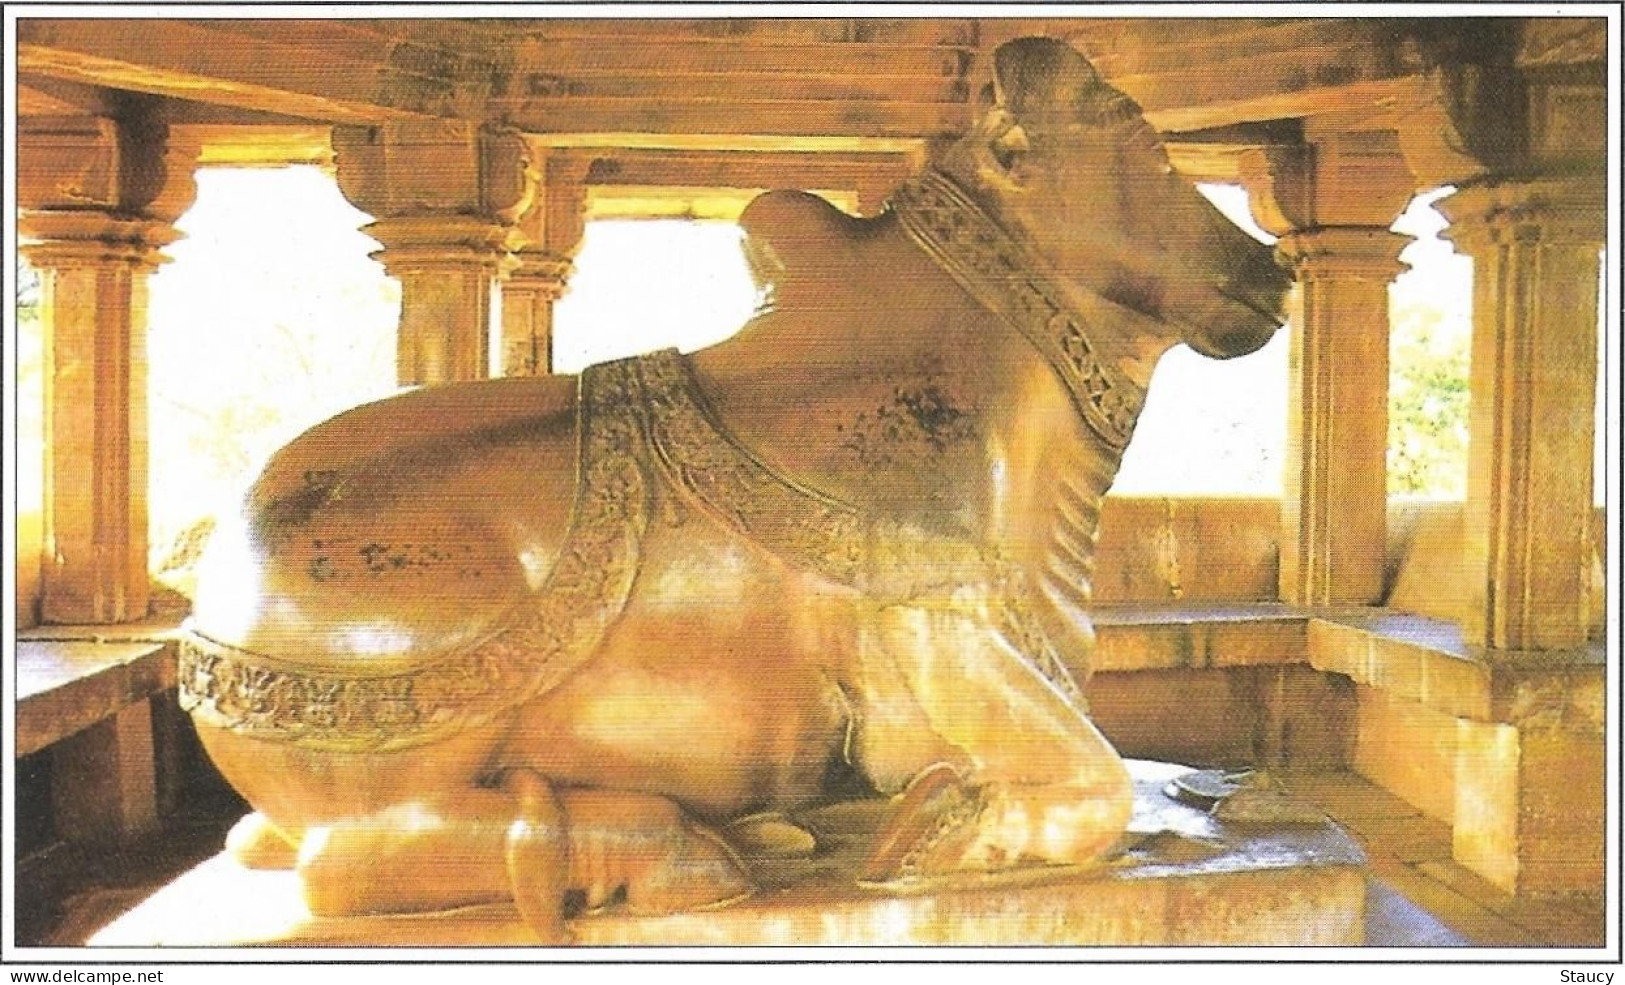 India Khajuraho Temples MONUMENTS - NANDI VISHVANATH Temple Picture Post CARD New As Per Scan - Ethniques, Cultures